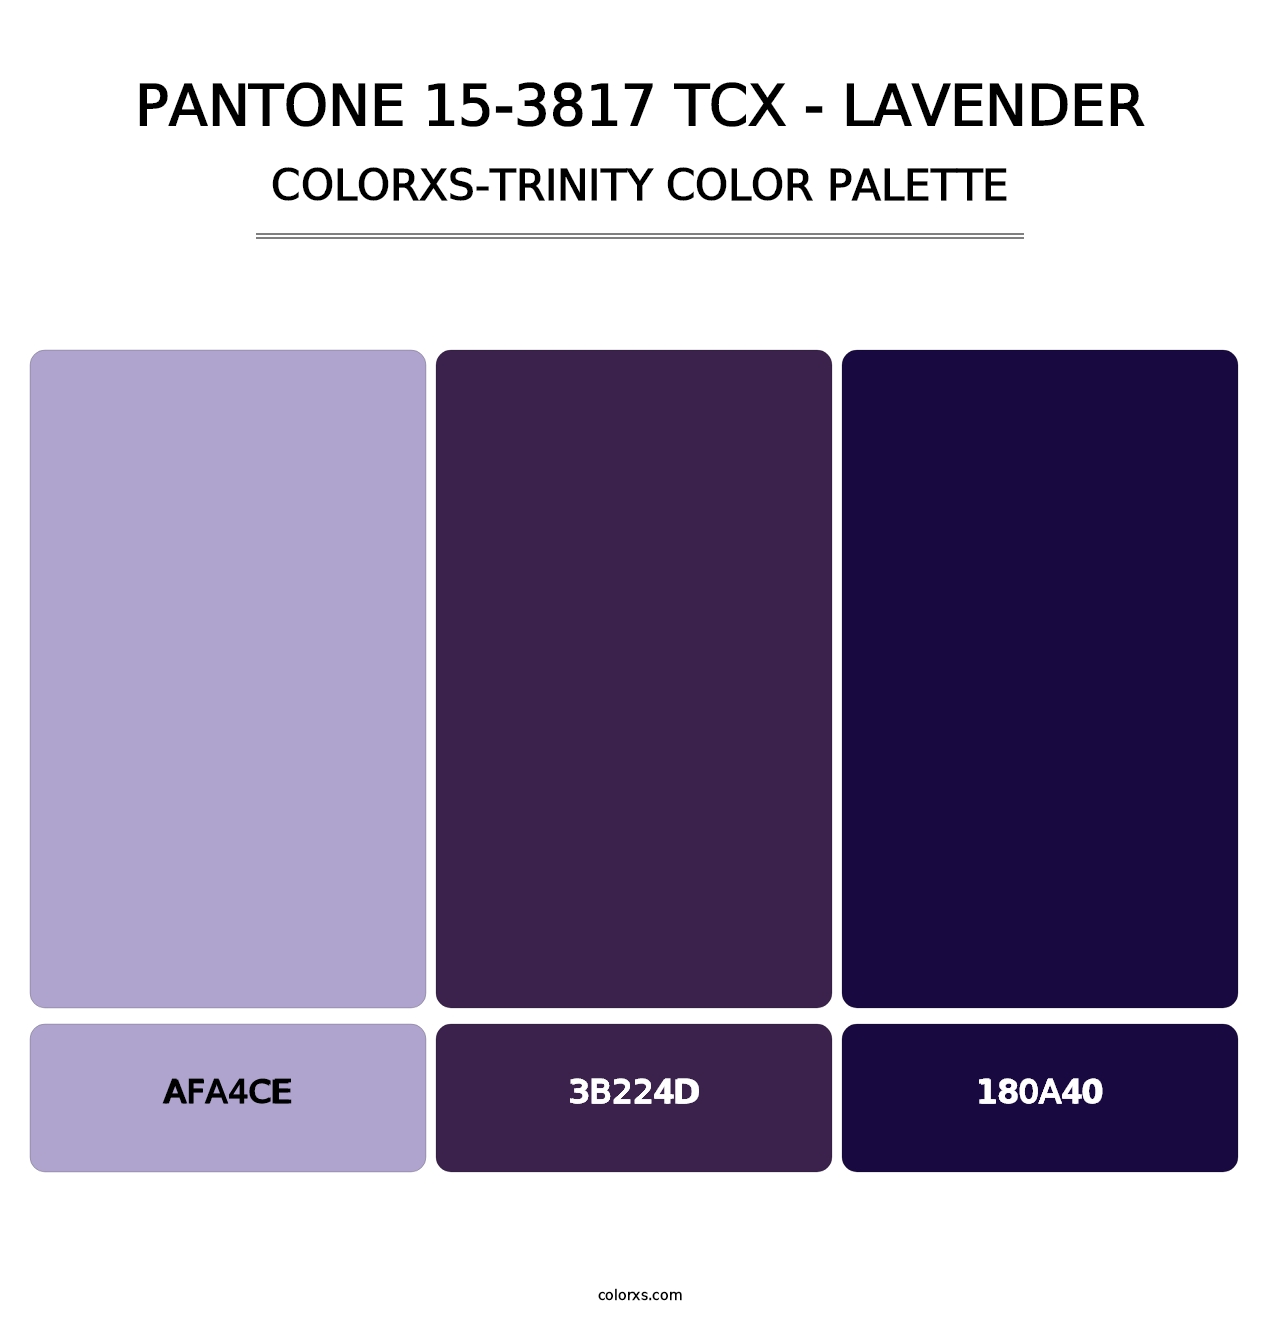 PANTONE 15-3817 TCX - Lavender - Colorxs Trinity Palette